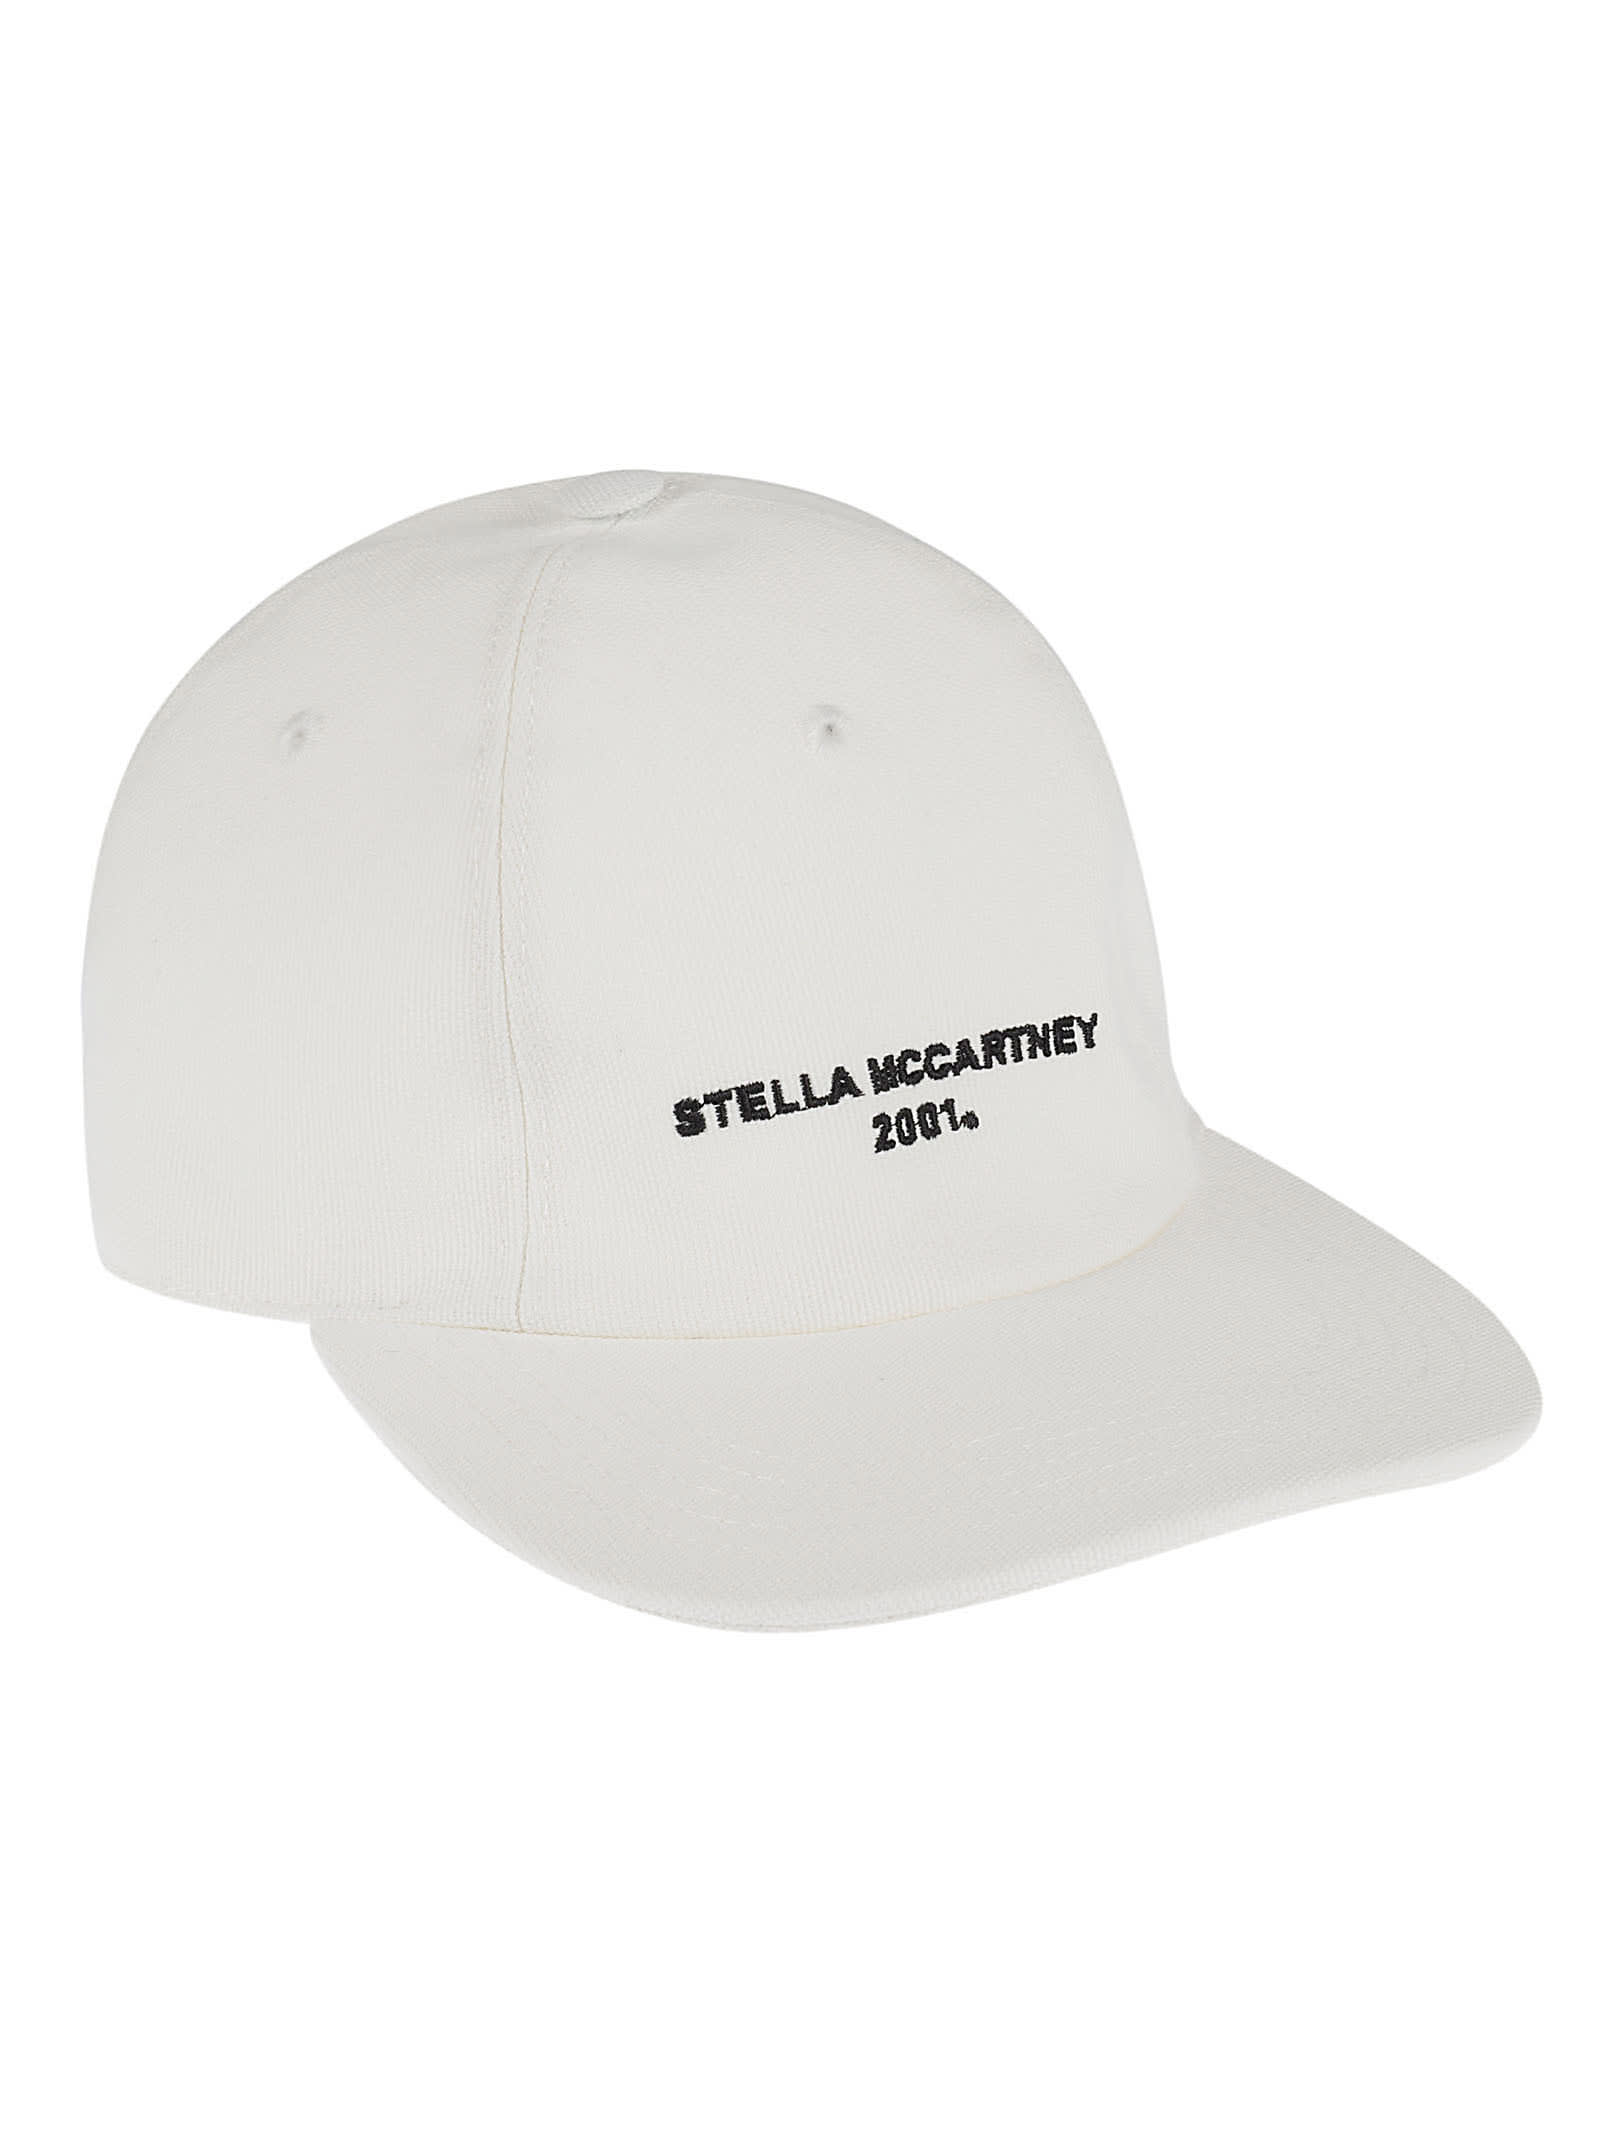 STELLA MCCARTNEY LOGO EMBROIDERED CAP